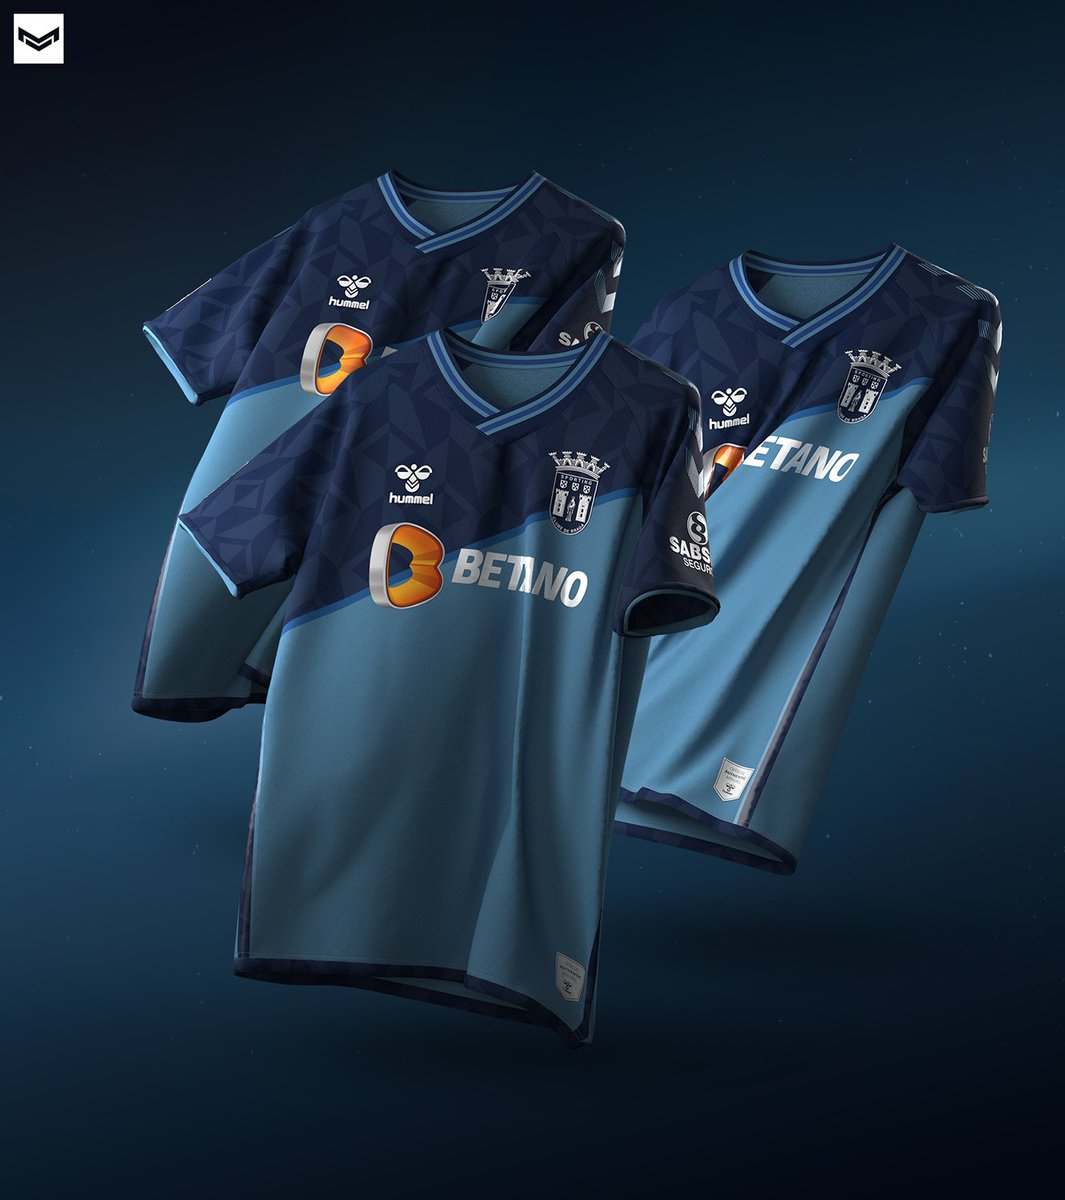 emmegraphic on Twitter: "• SC Braga | Hummel | away kit concept 🇵🇹 » shirt model by @marito_plottier 🔥 » model by @gurzydesign &amp; @tridente_trdnt #Braga #SCBraga #Hummel https://t.co/QYiz55VOWP" / Twitter